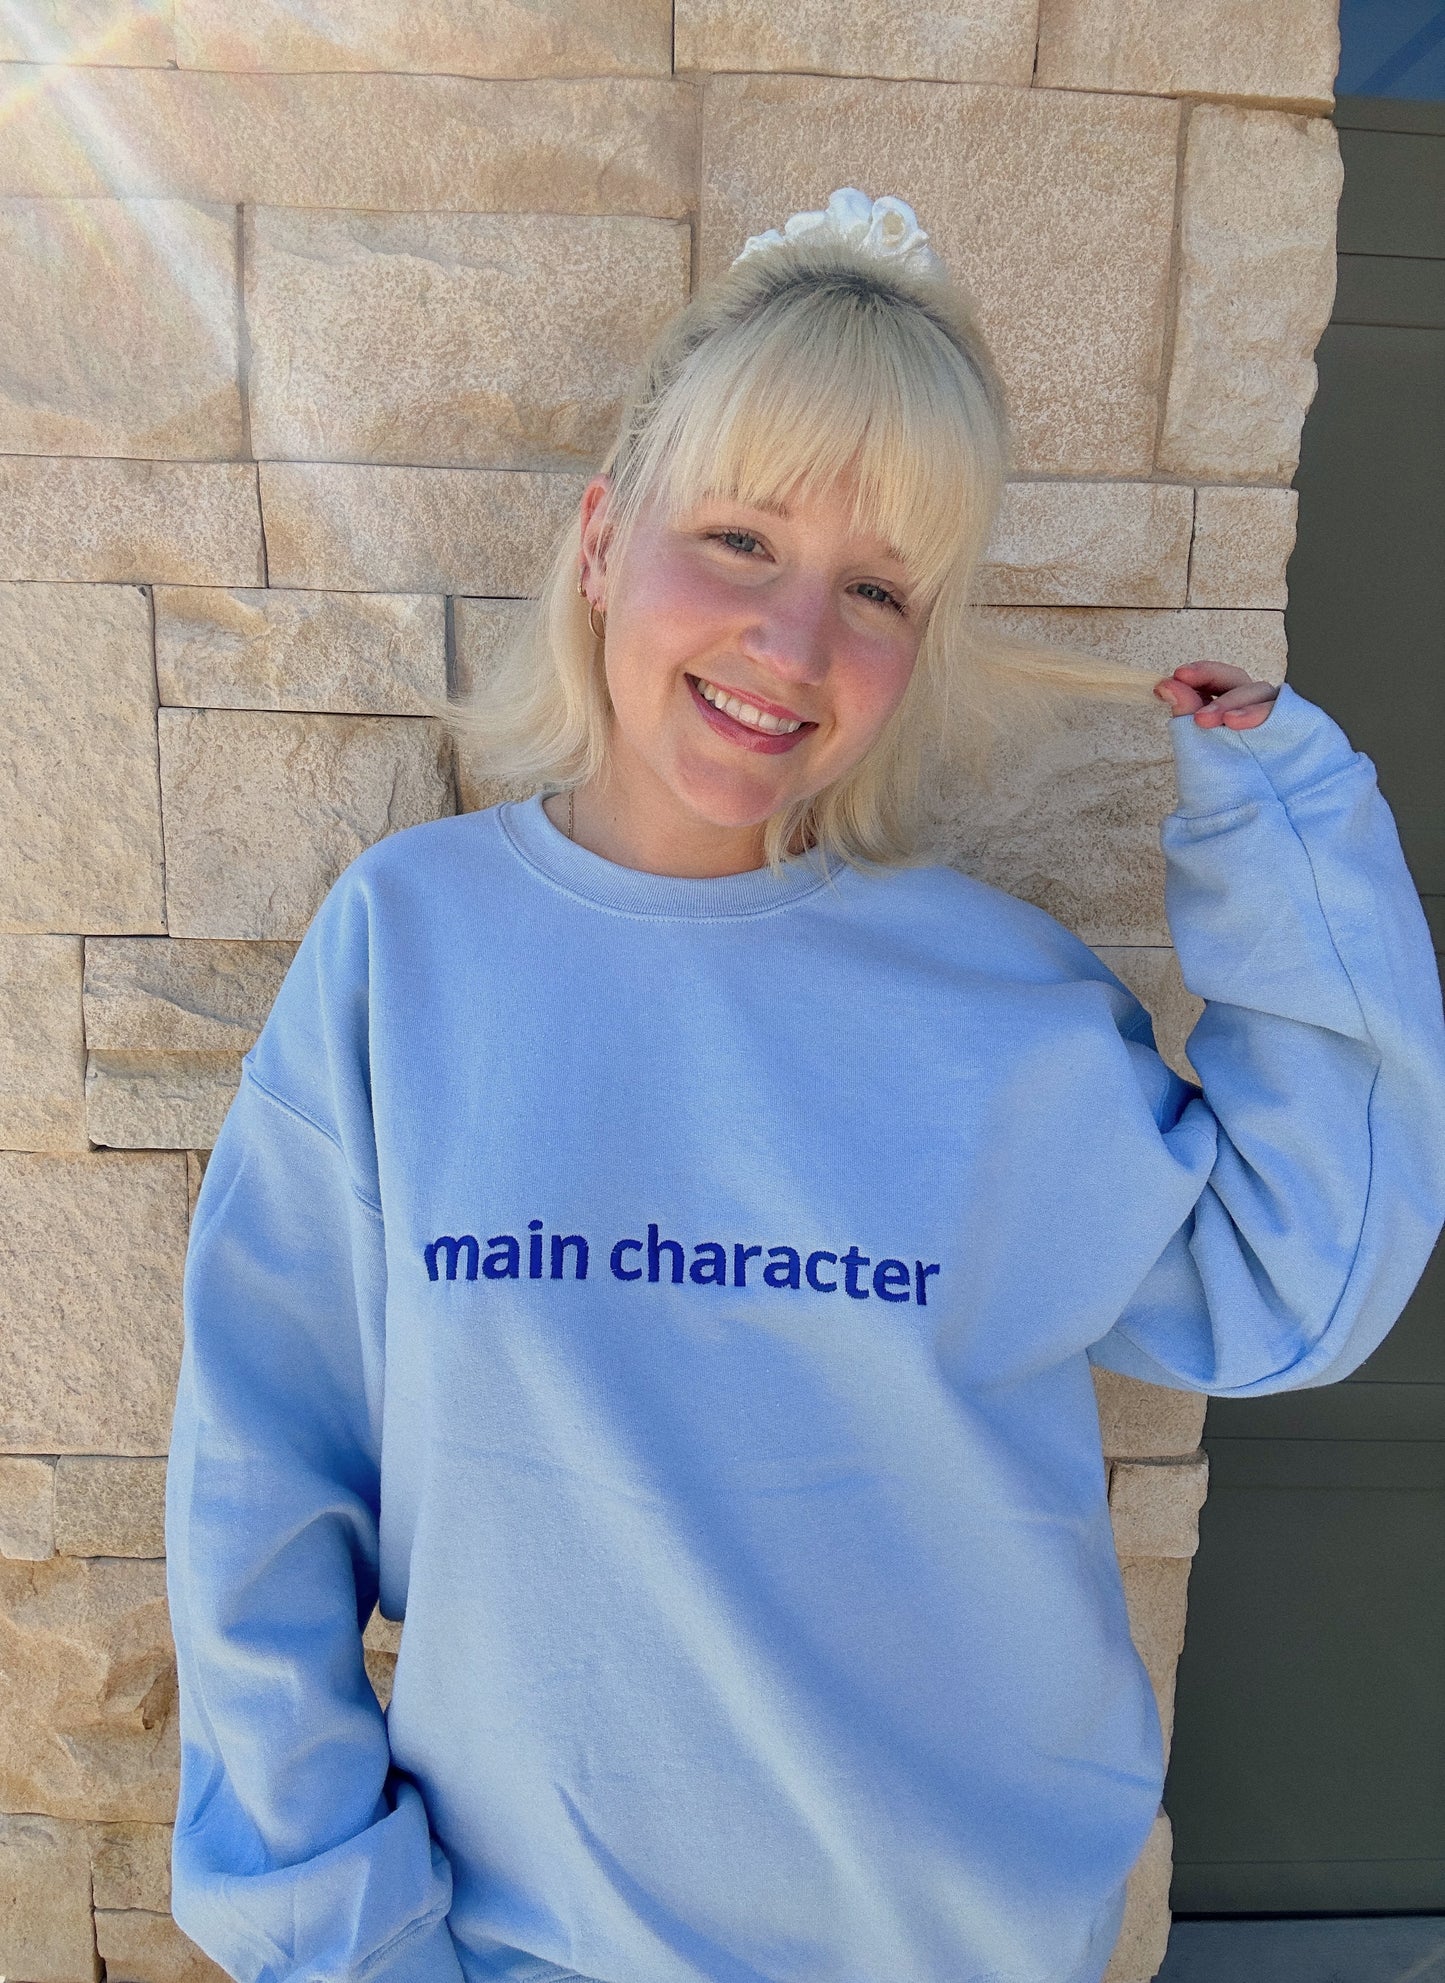 Main Character Sweatshirt